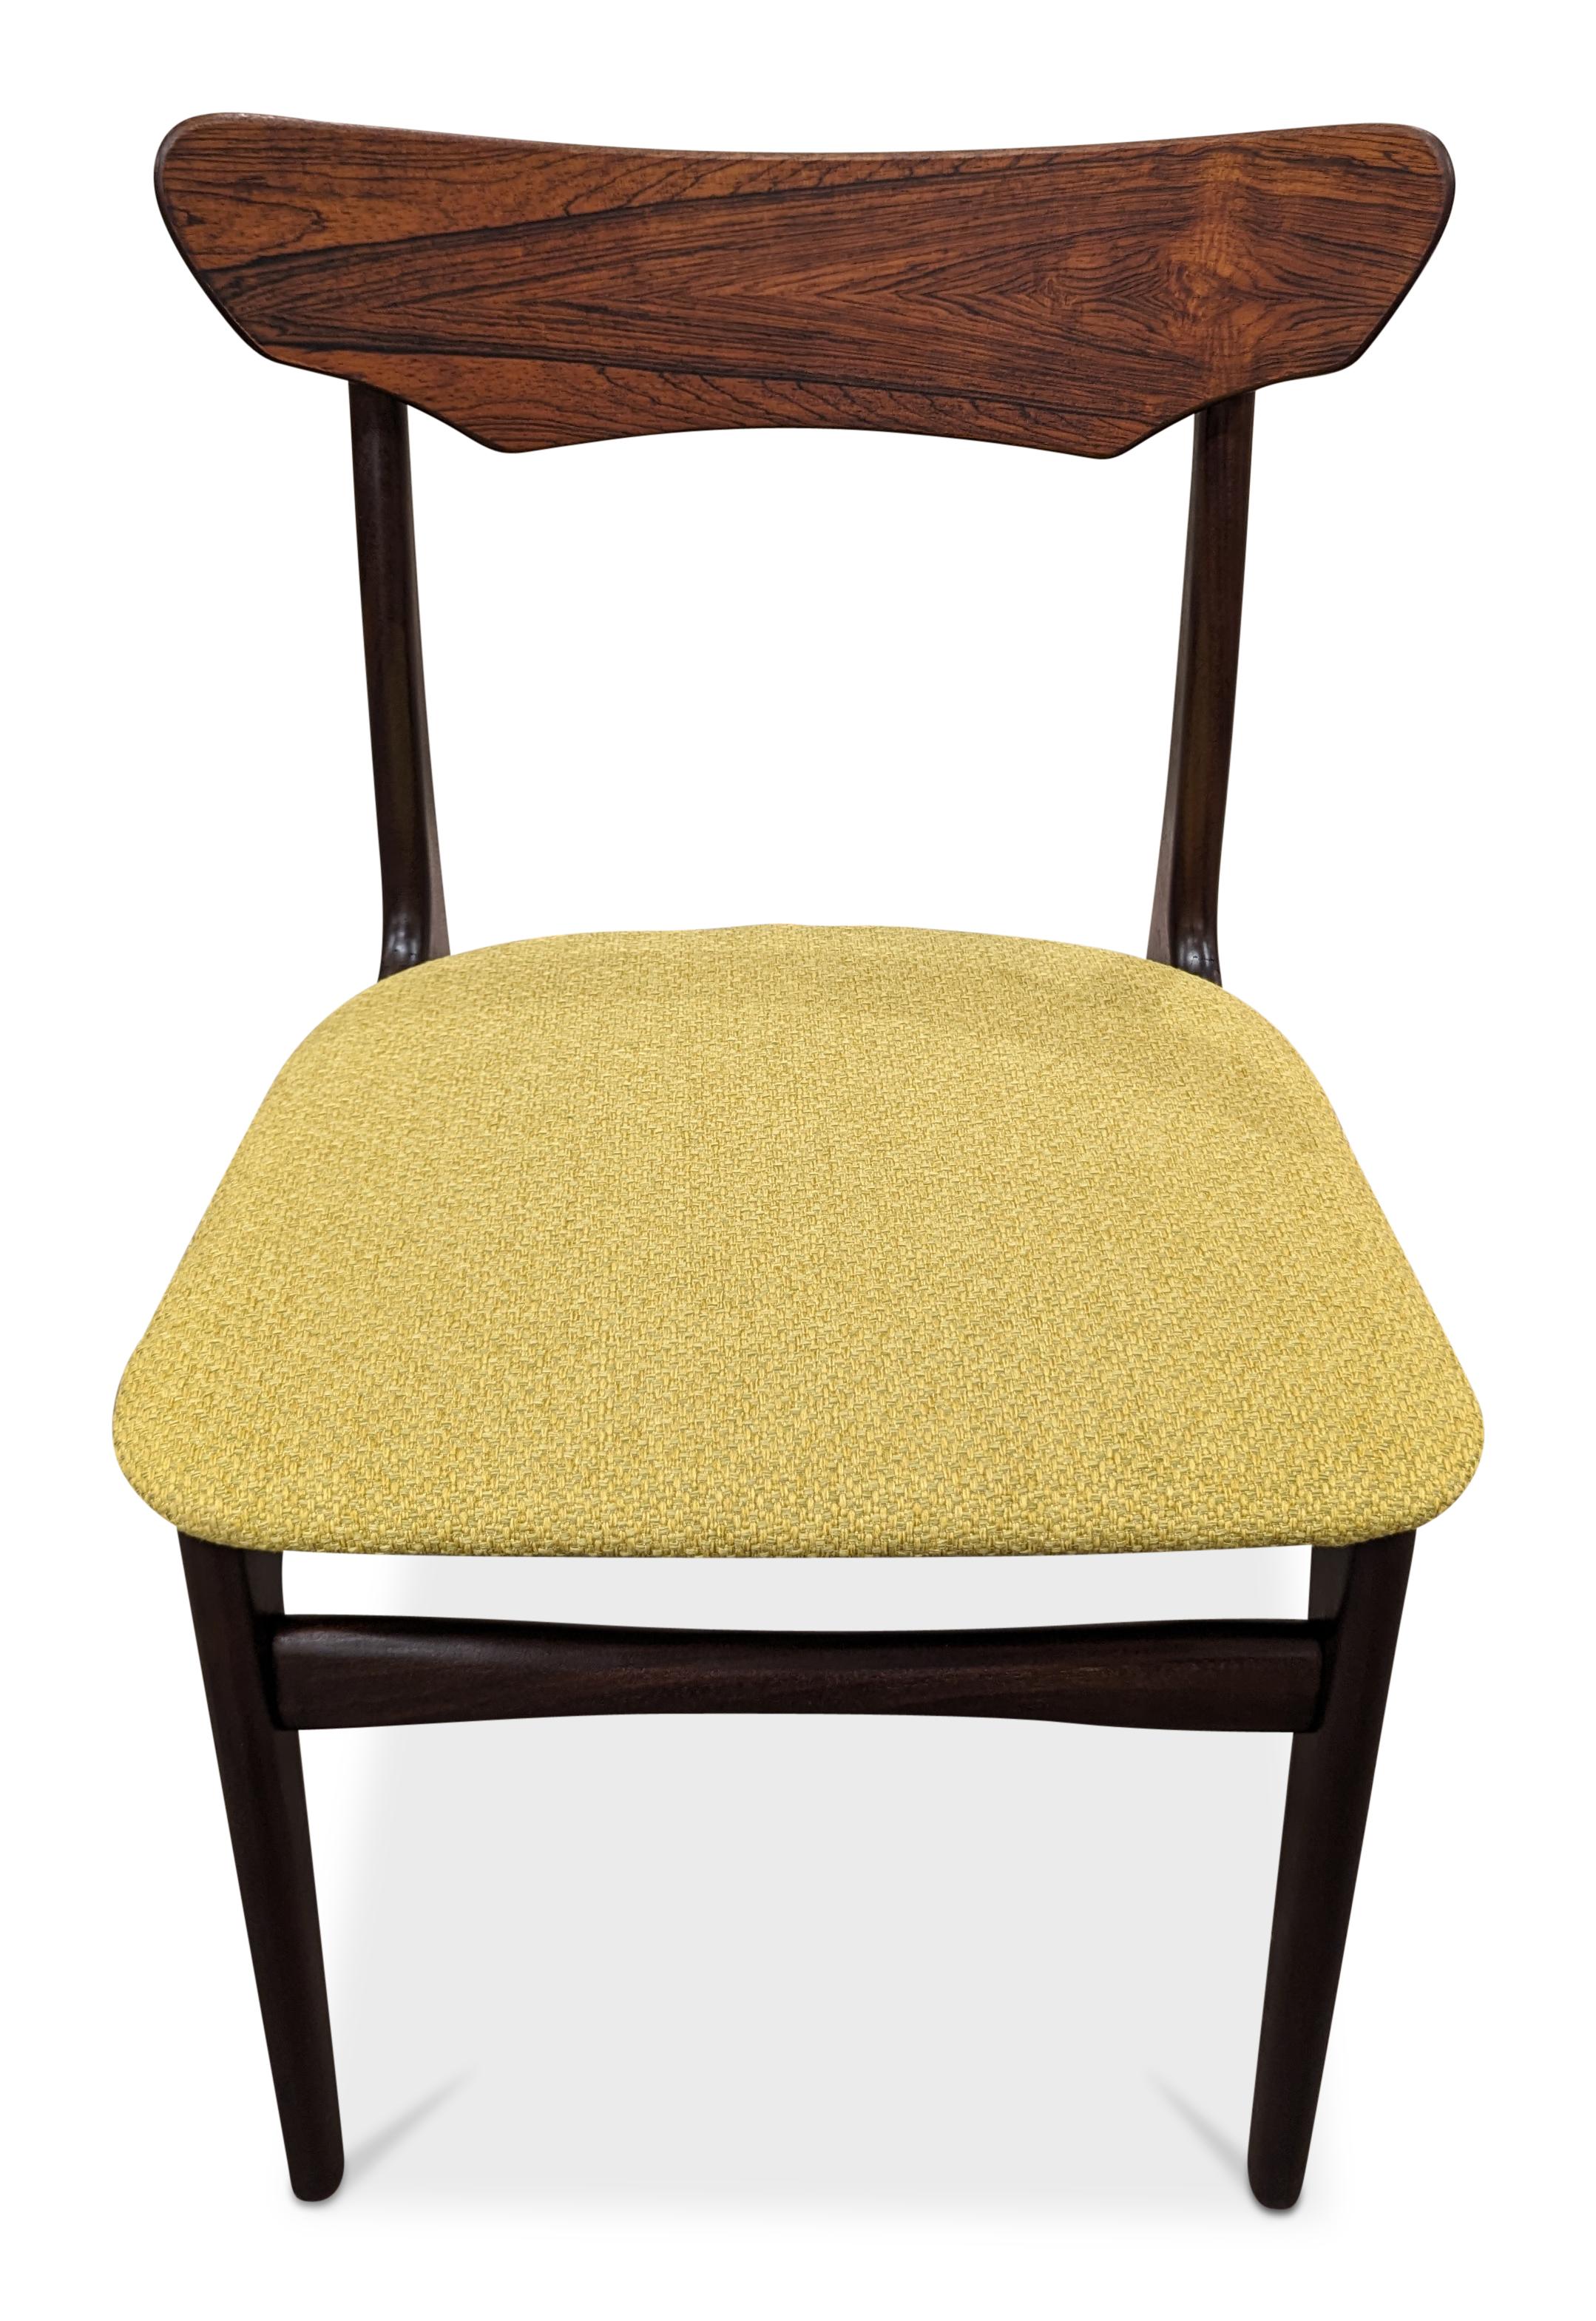 6 Schoning Elegaard Rosewood Dining Chairs - 0224121 Vintage Danish Mid Century 4